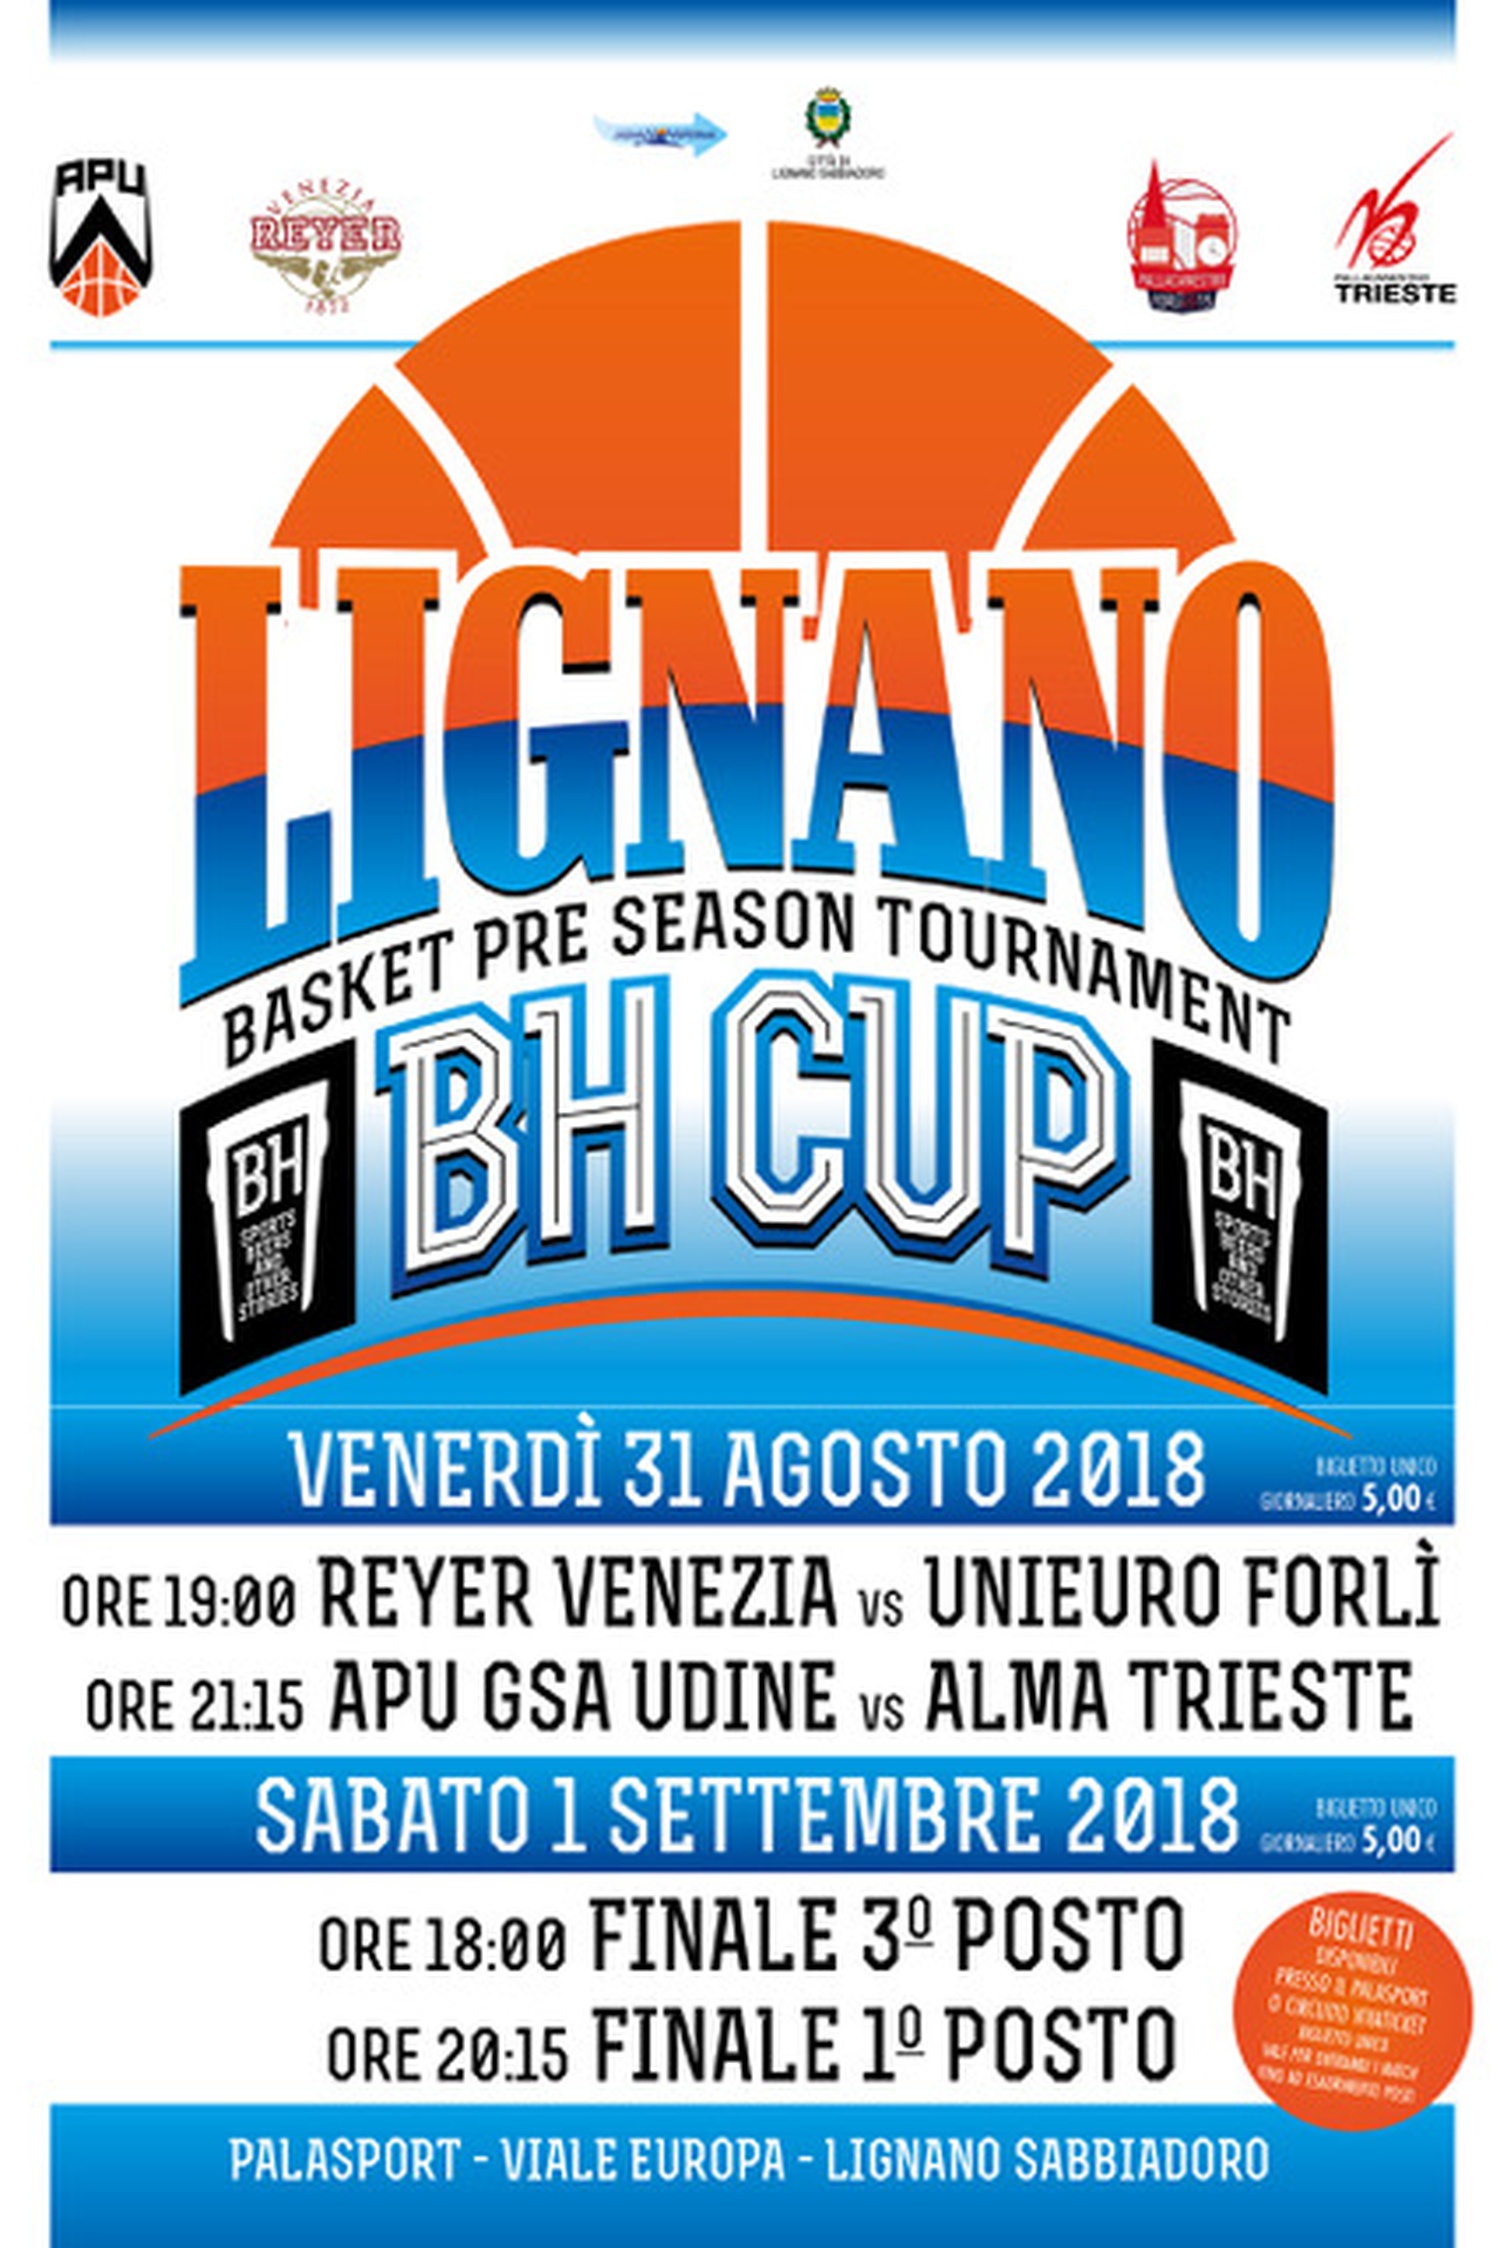 Fotos vonLignano BH Cup - Basket pre-season tournament 